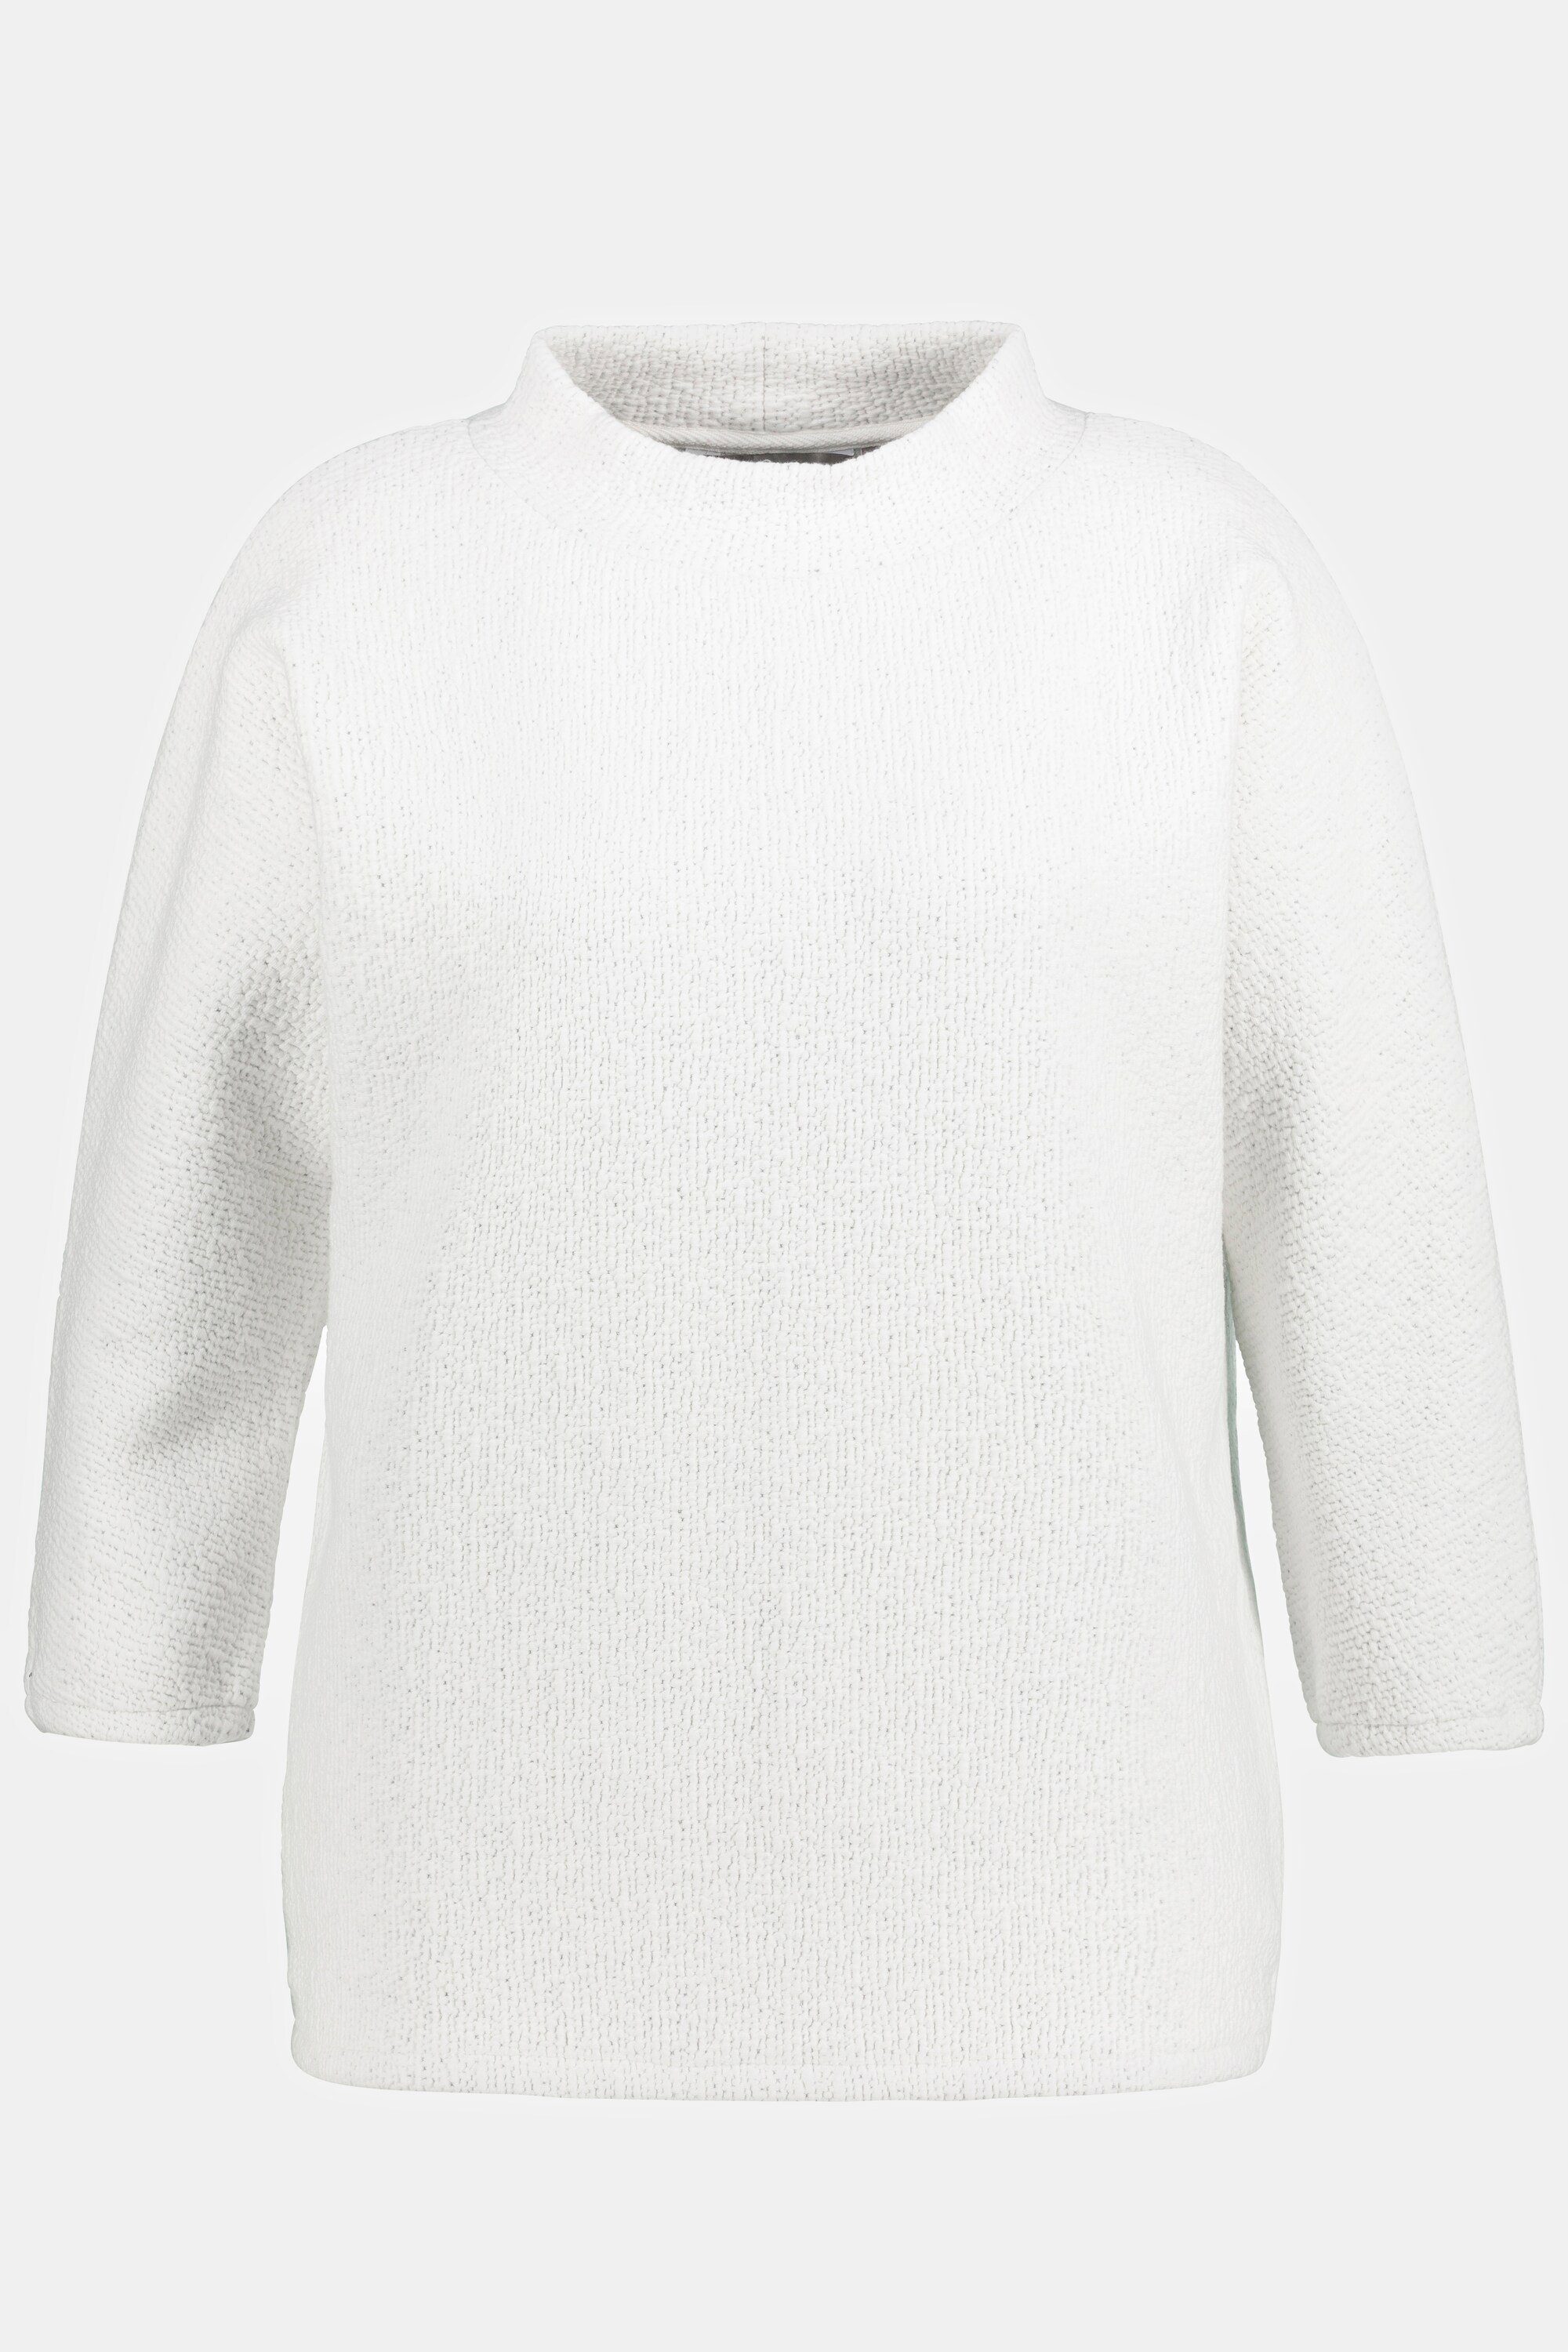 Ulla Popken Sweatshirt Oversized offwhite 3/4-Fledermausarm Stehkragen Sweatshirt